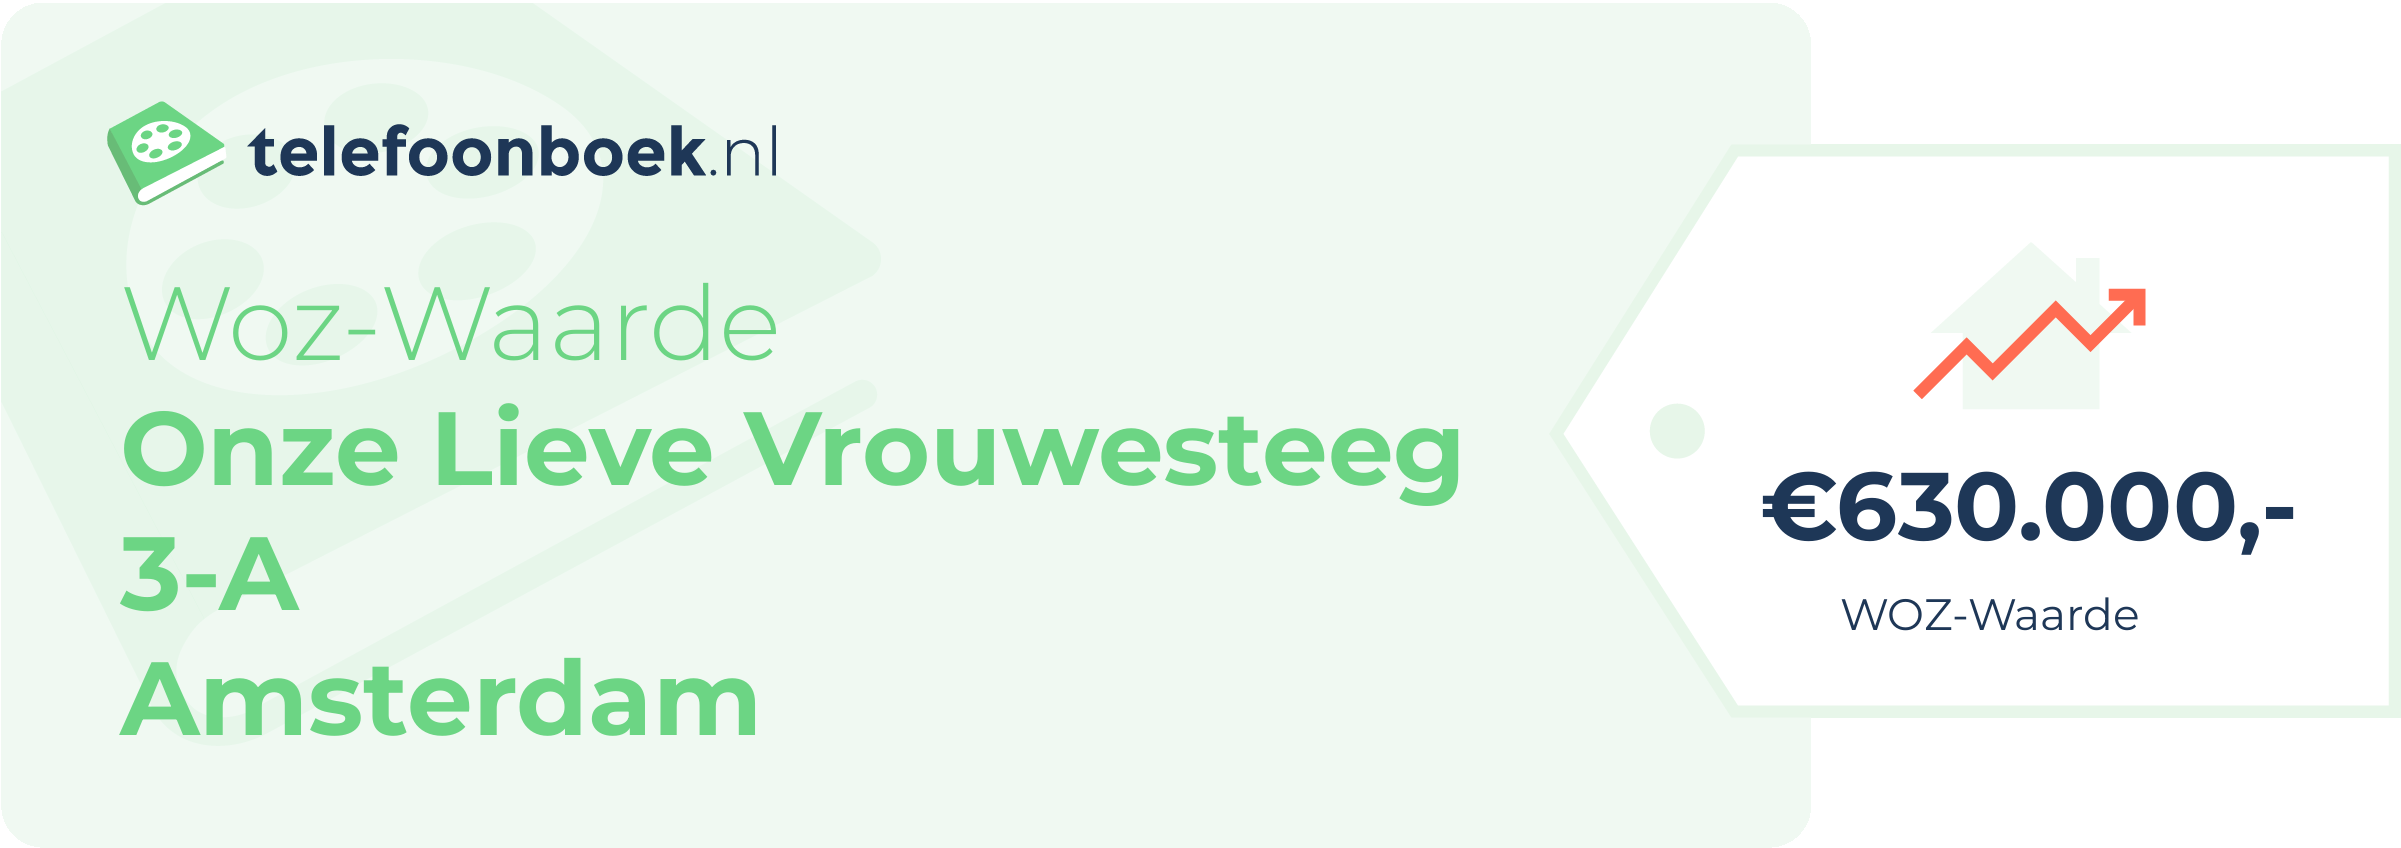 WOZ-waarde Onze Lieve Vrouwesteeg 3-A Amsterdam